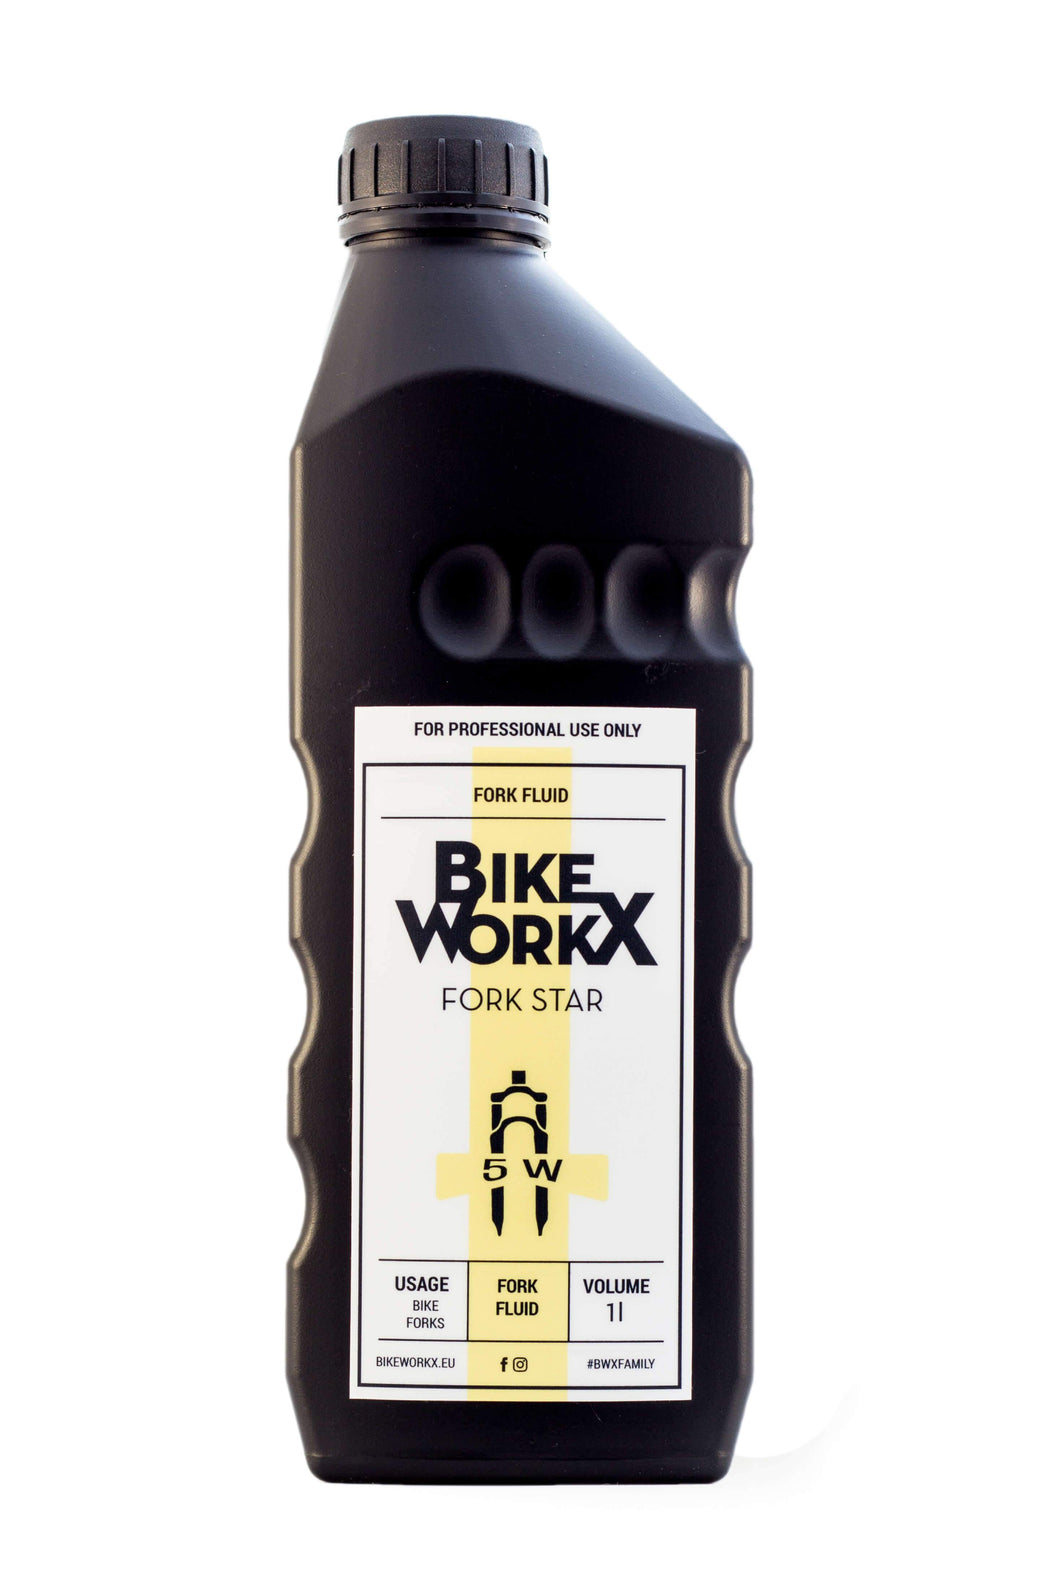 Bikeworkx Fork Star